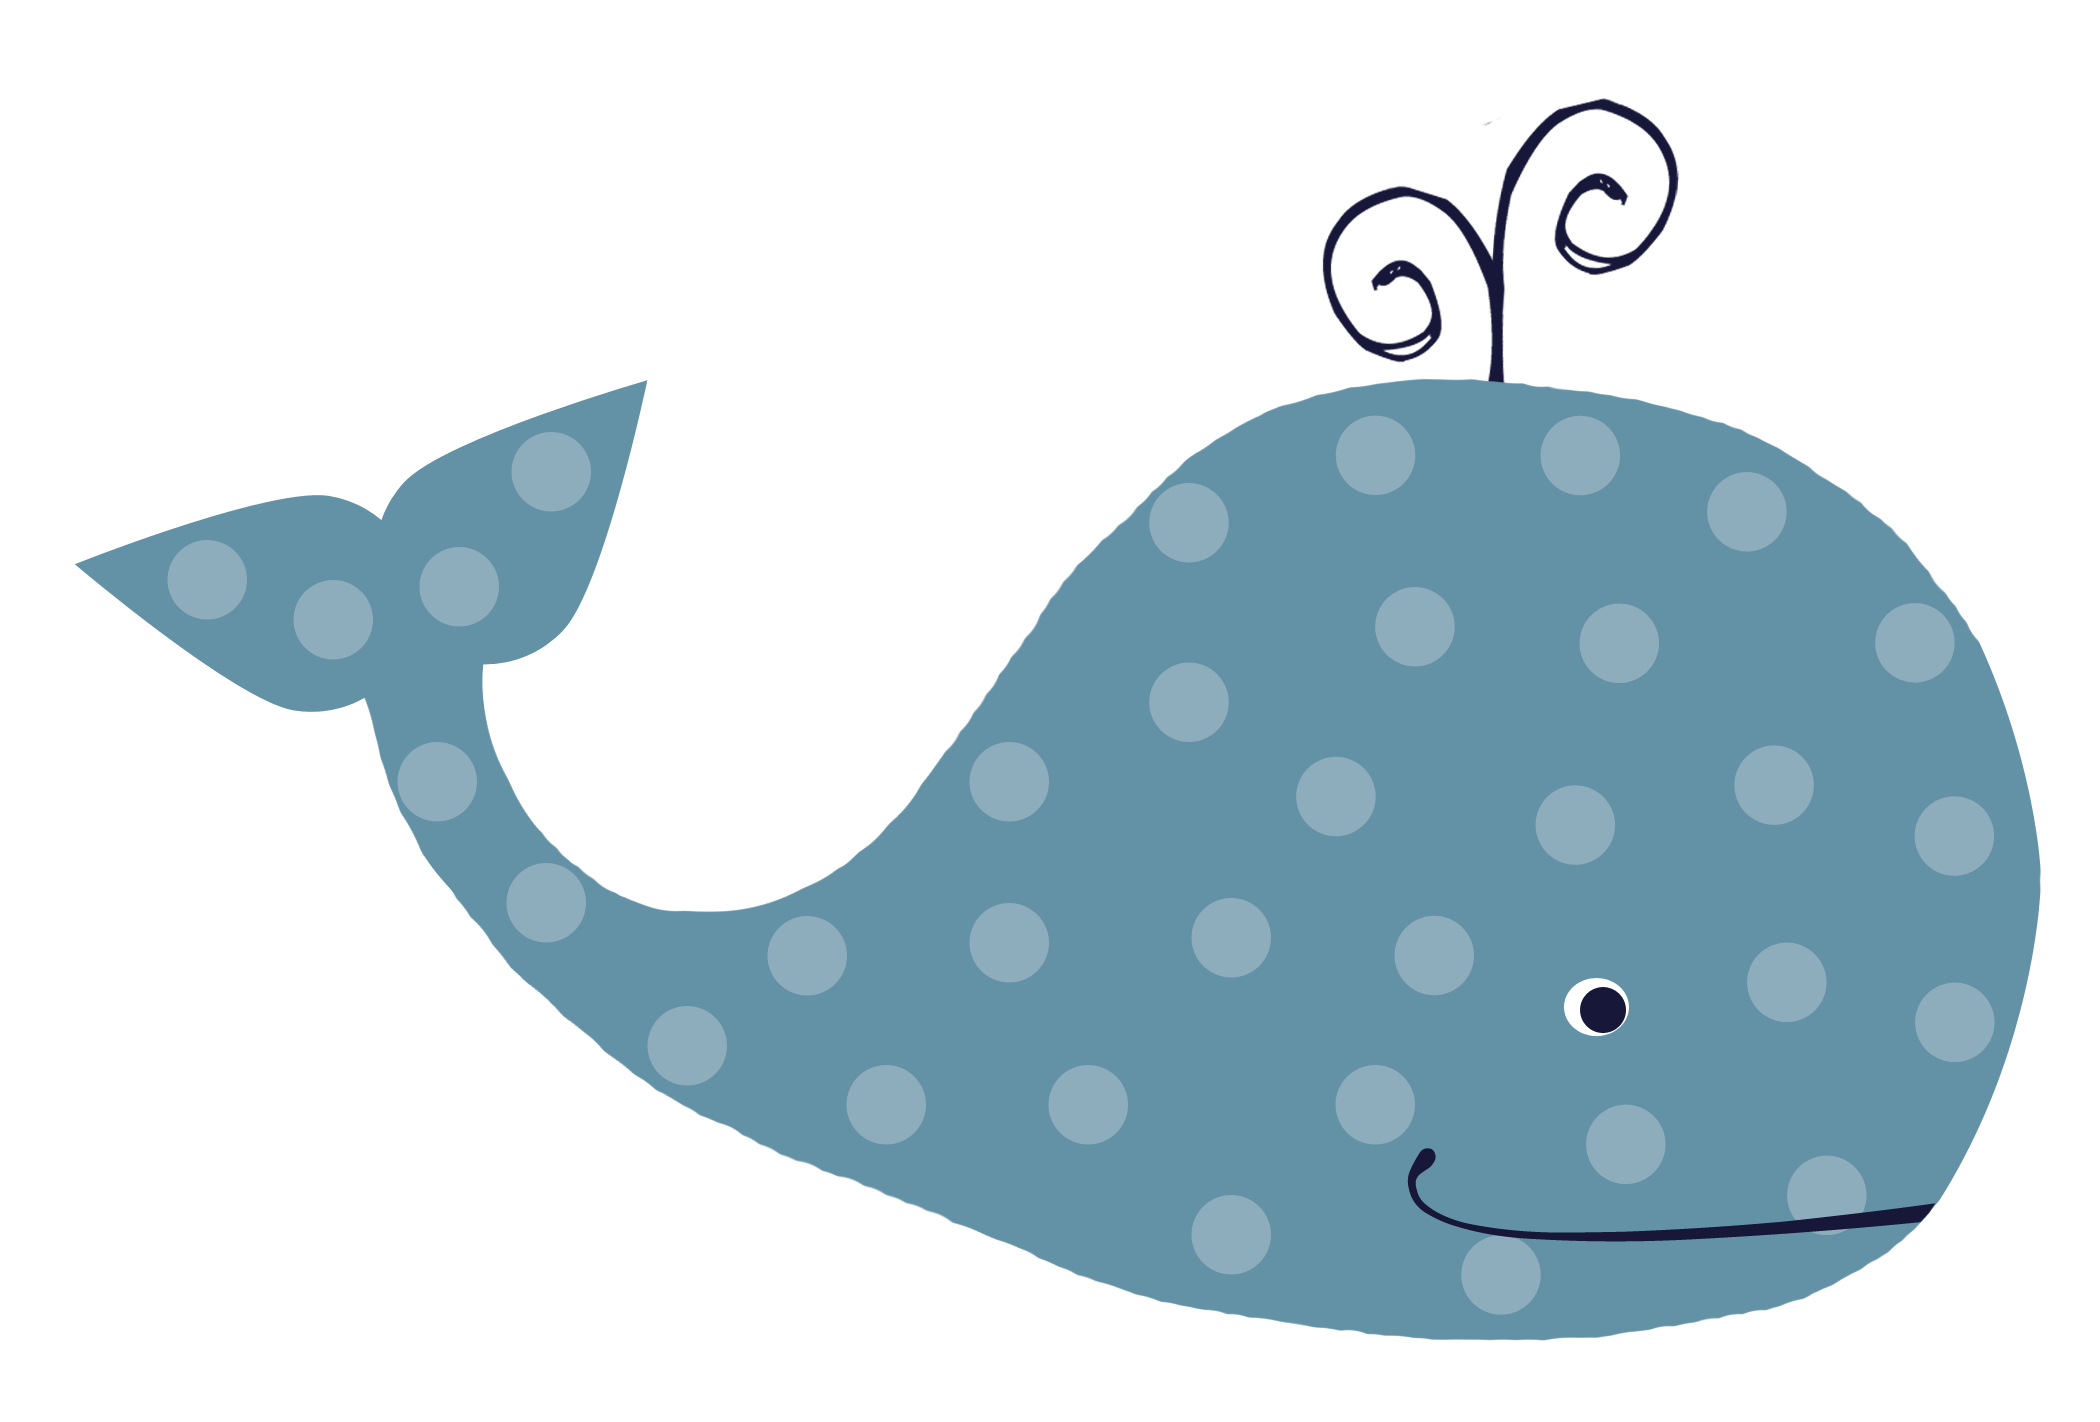 Whale clipart, cute animal cl